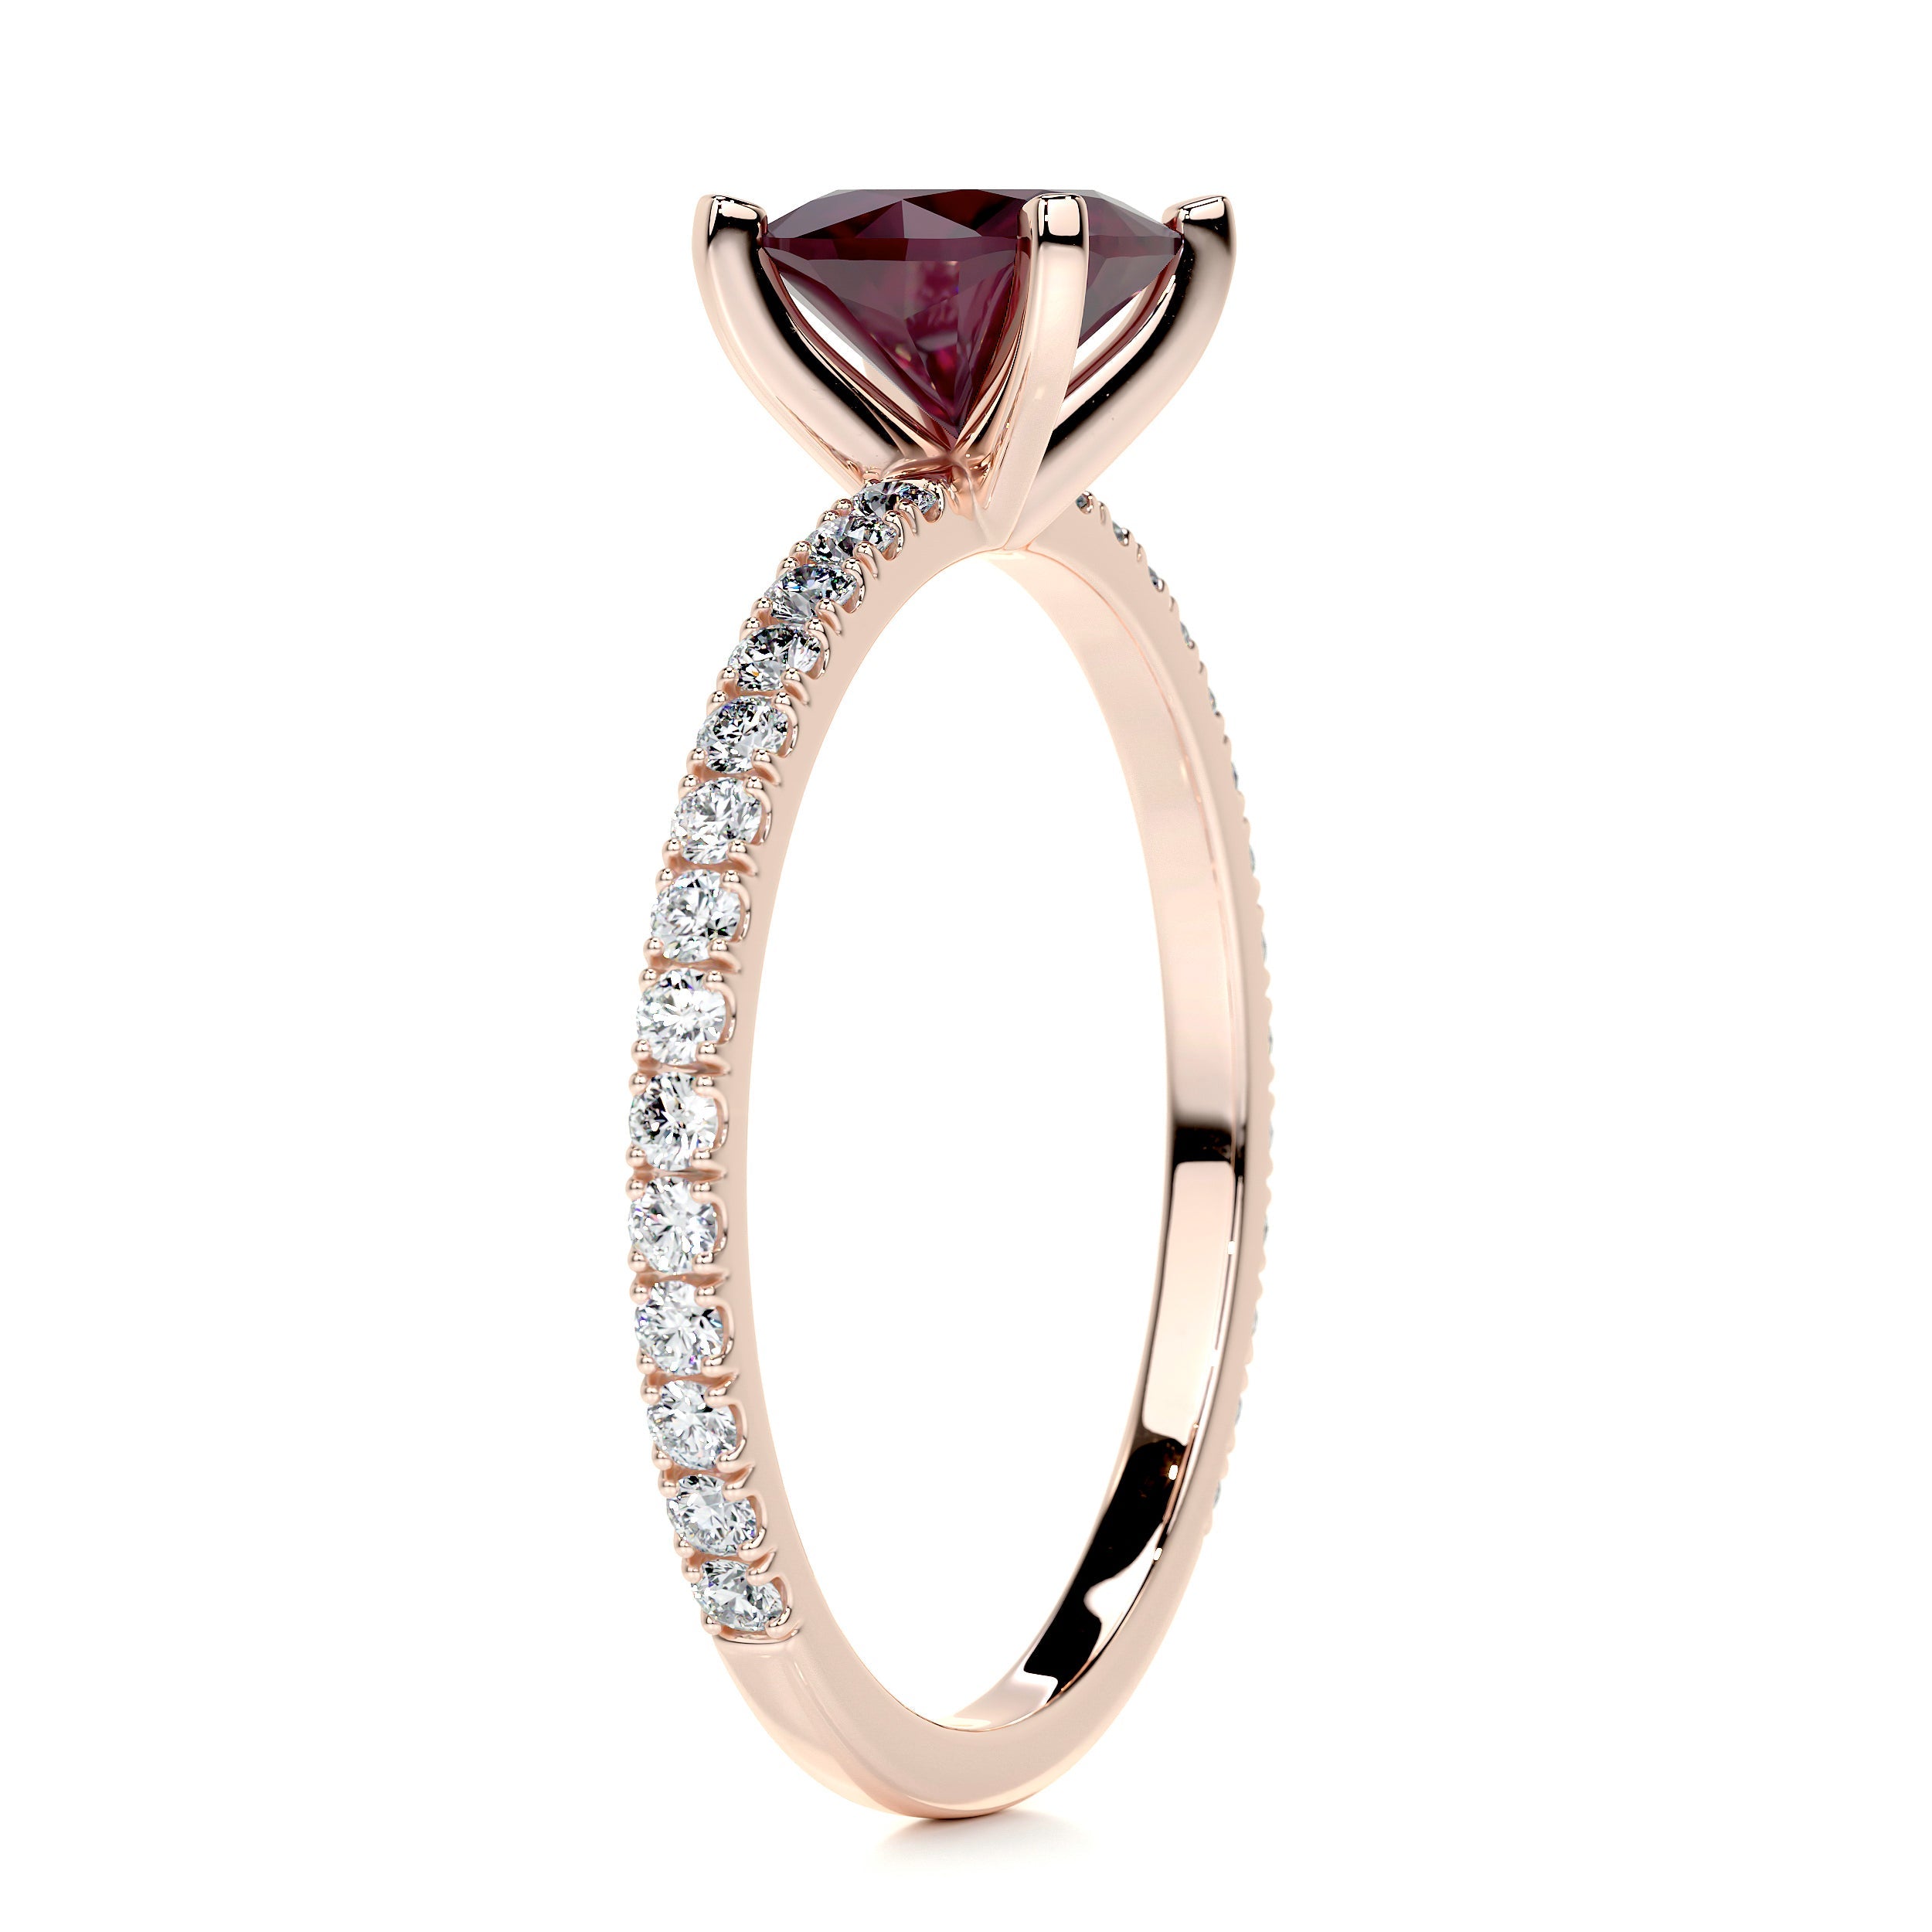 Stephanie Gemstone & Diamonds Ring   (1.8 Carat) -14K Rose Gold (RTS)